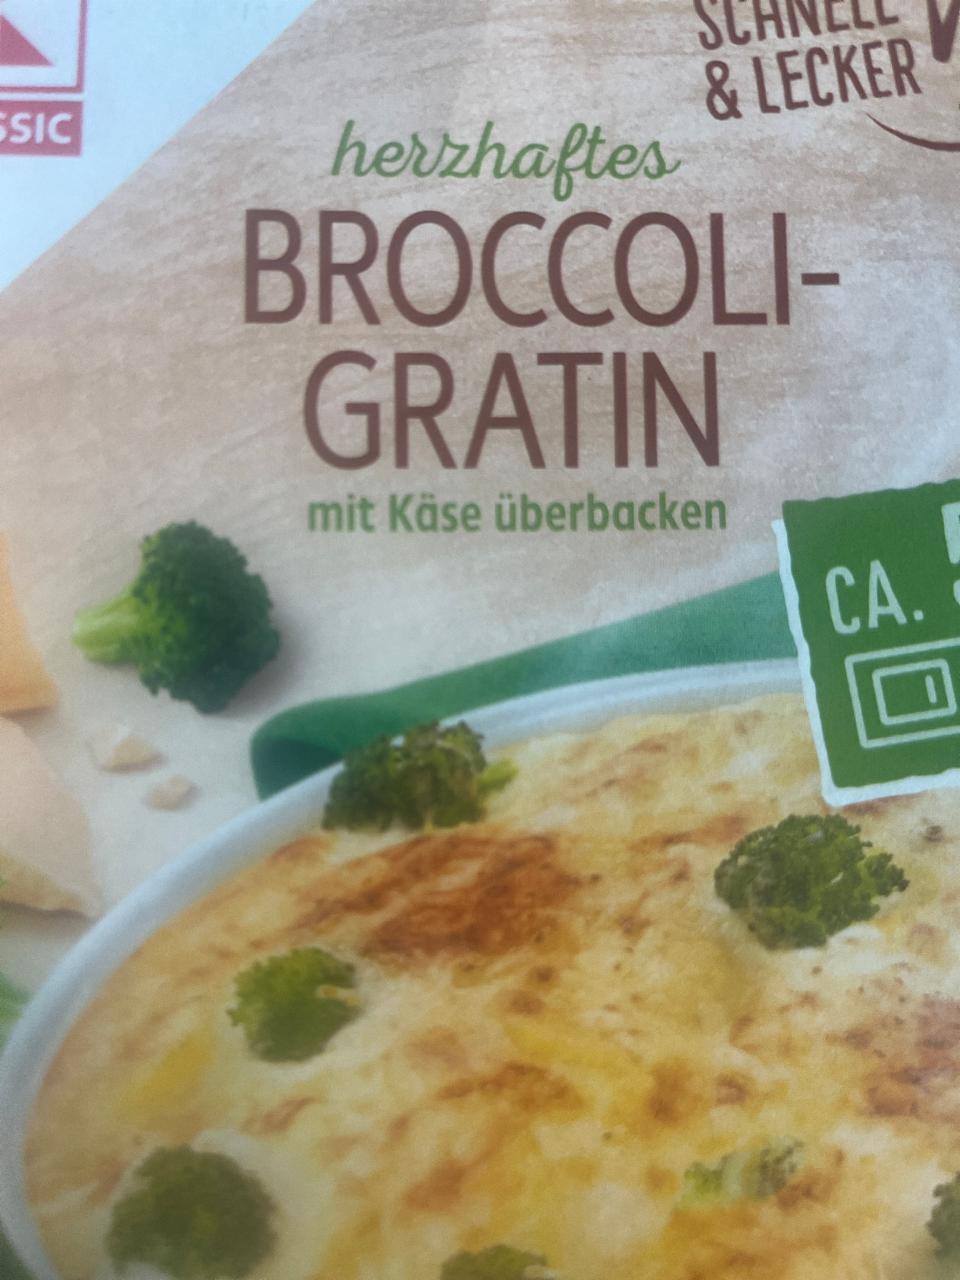 Fotografie - Broccoli-gratin mit Käse überbacken K-Classic